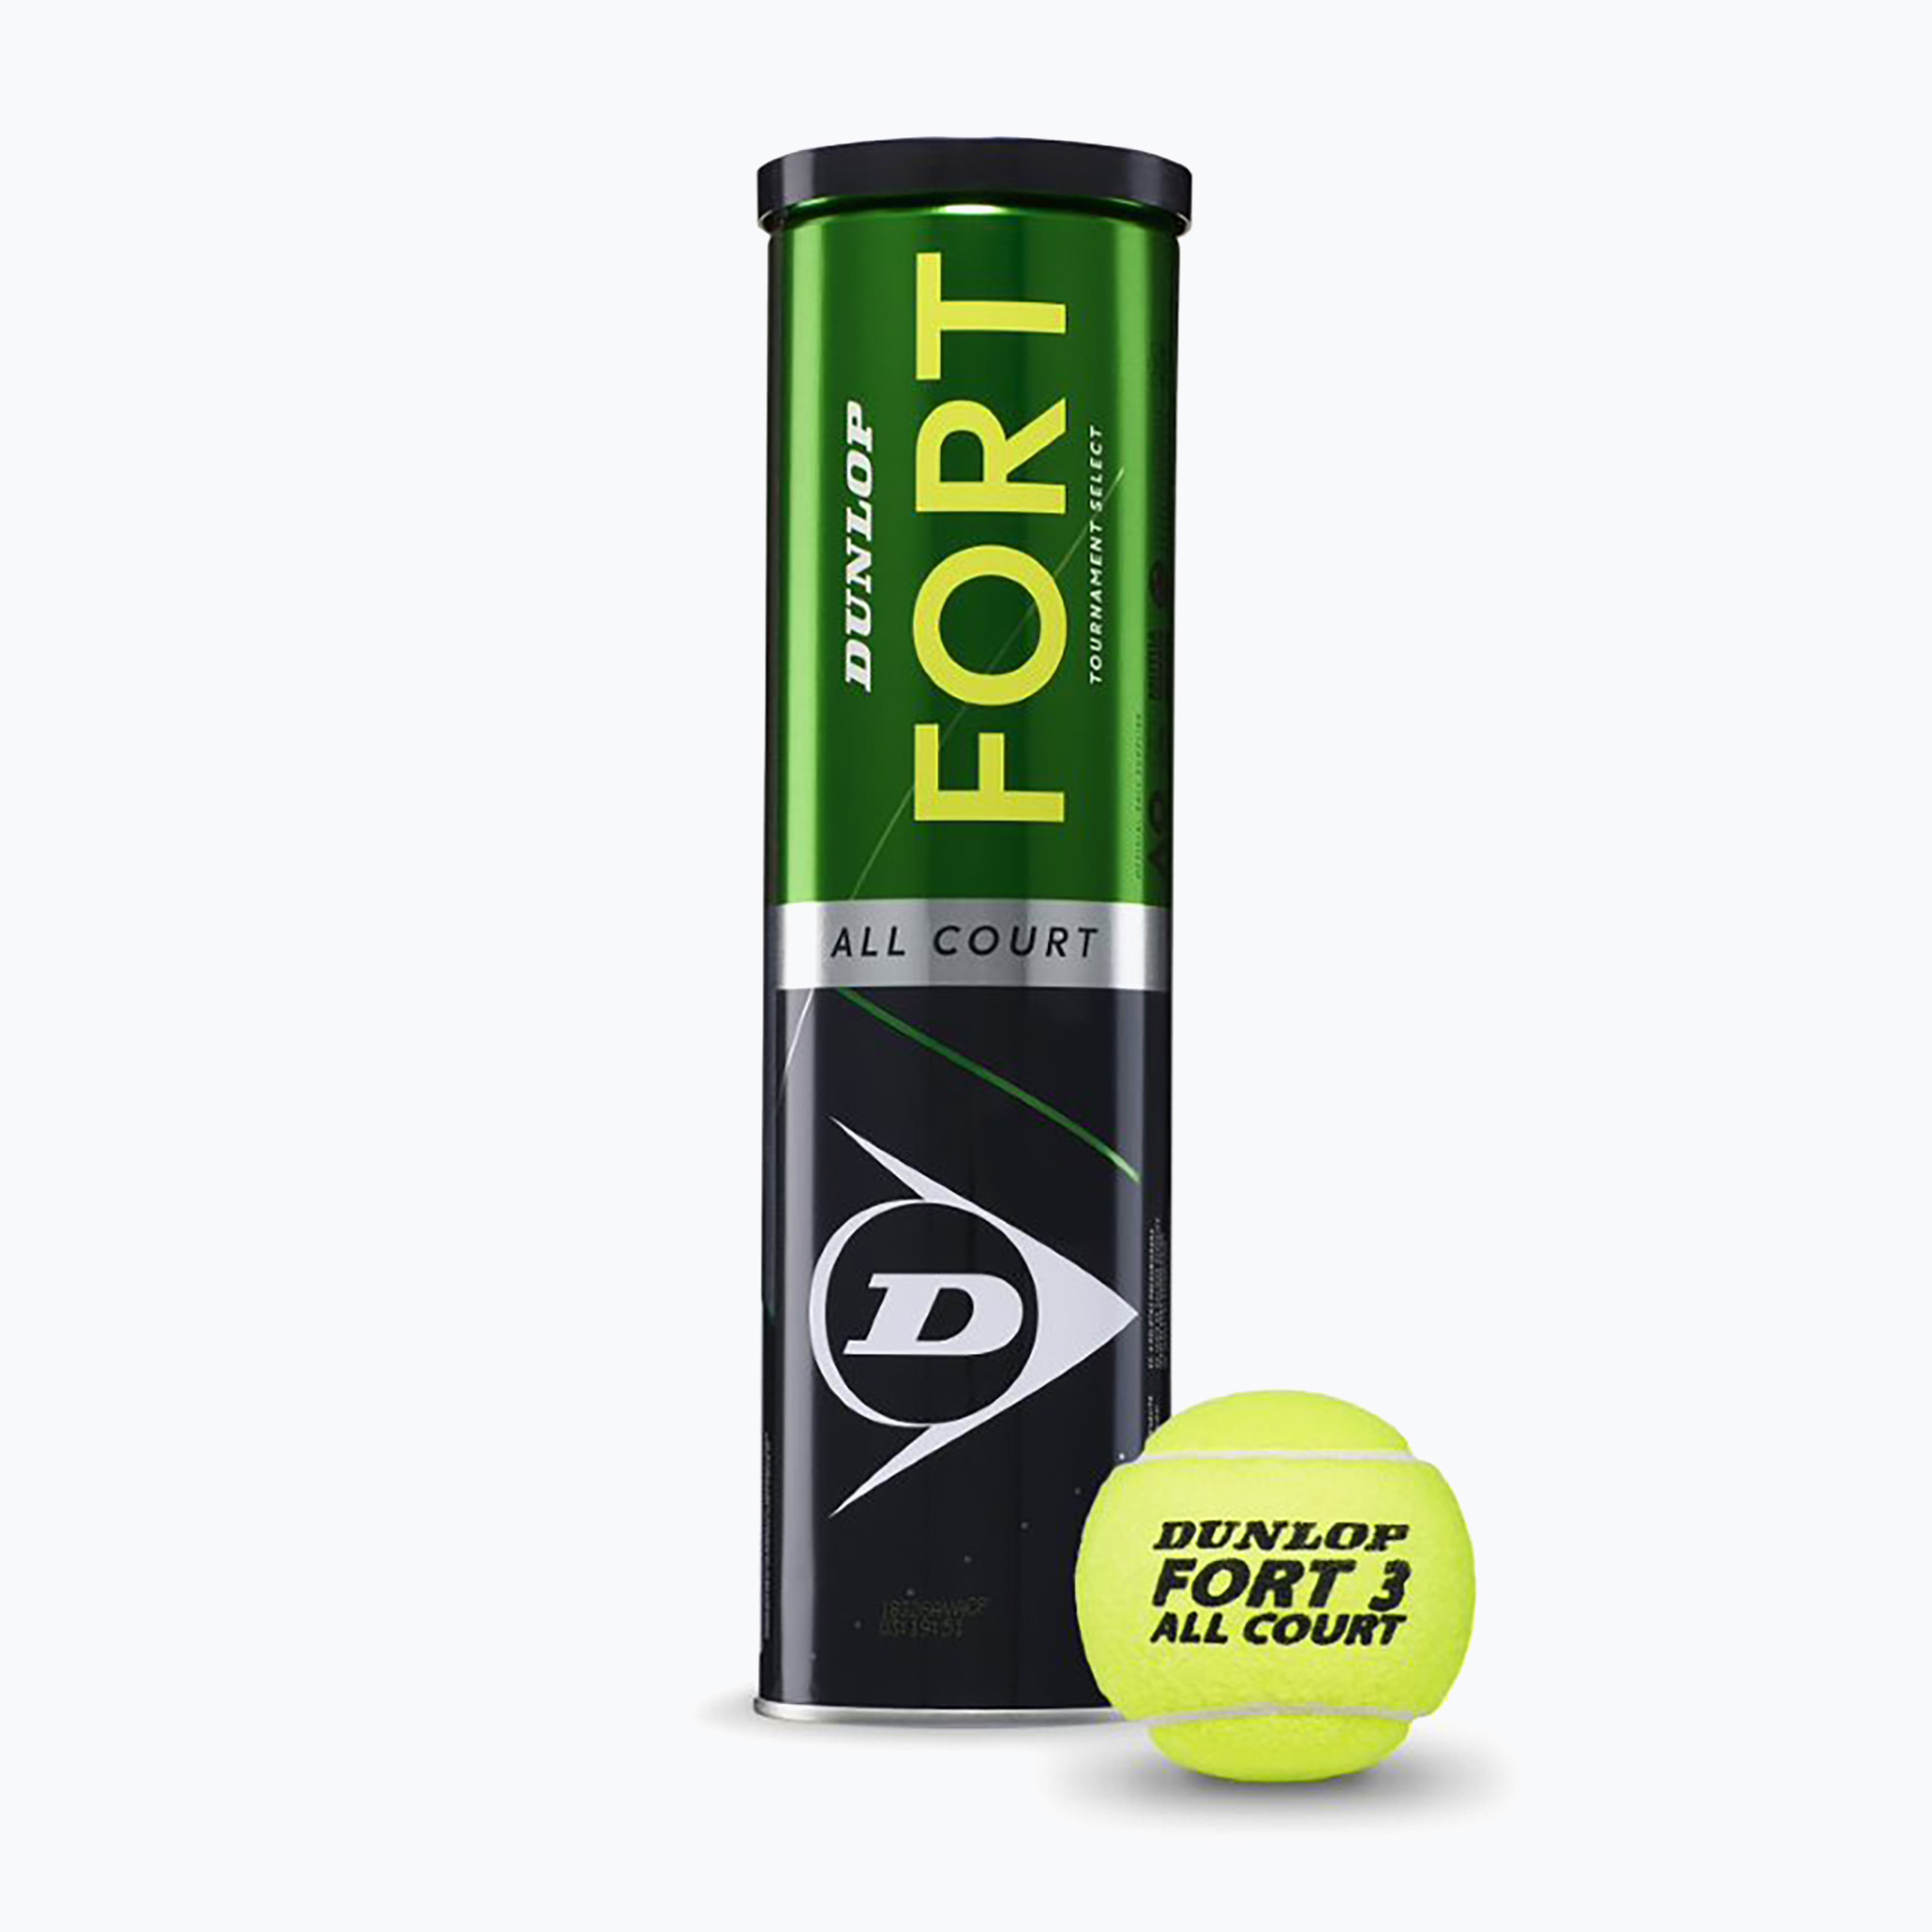 Dunlop Fort All Court TS tenisové loptičky 4 ks žlté 601316